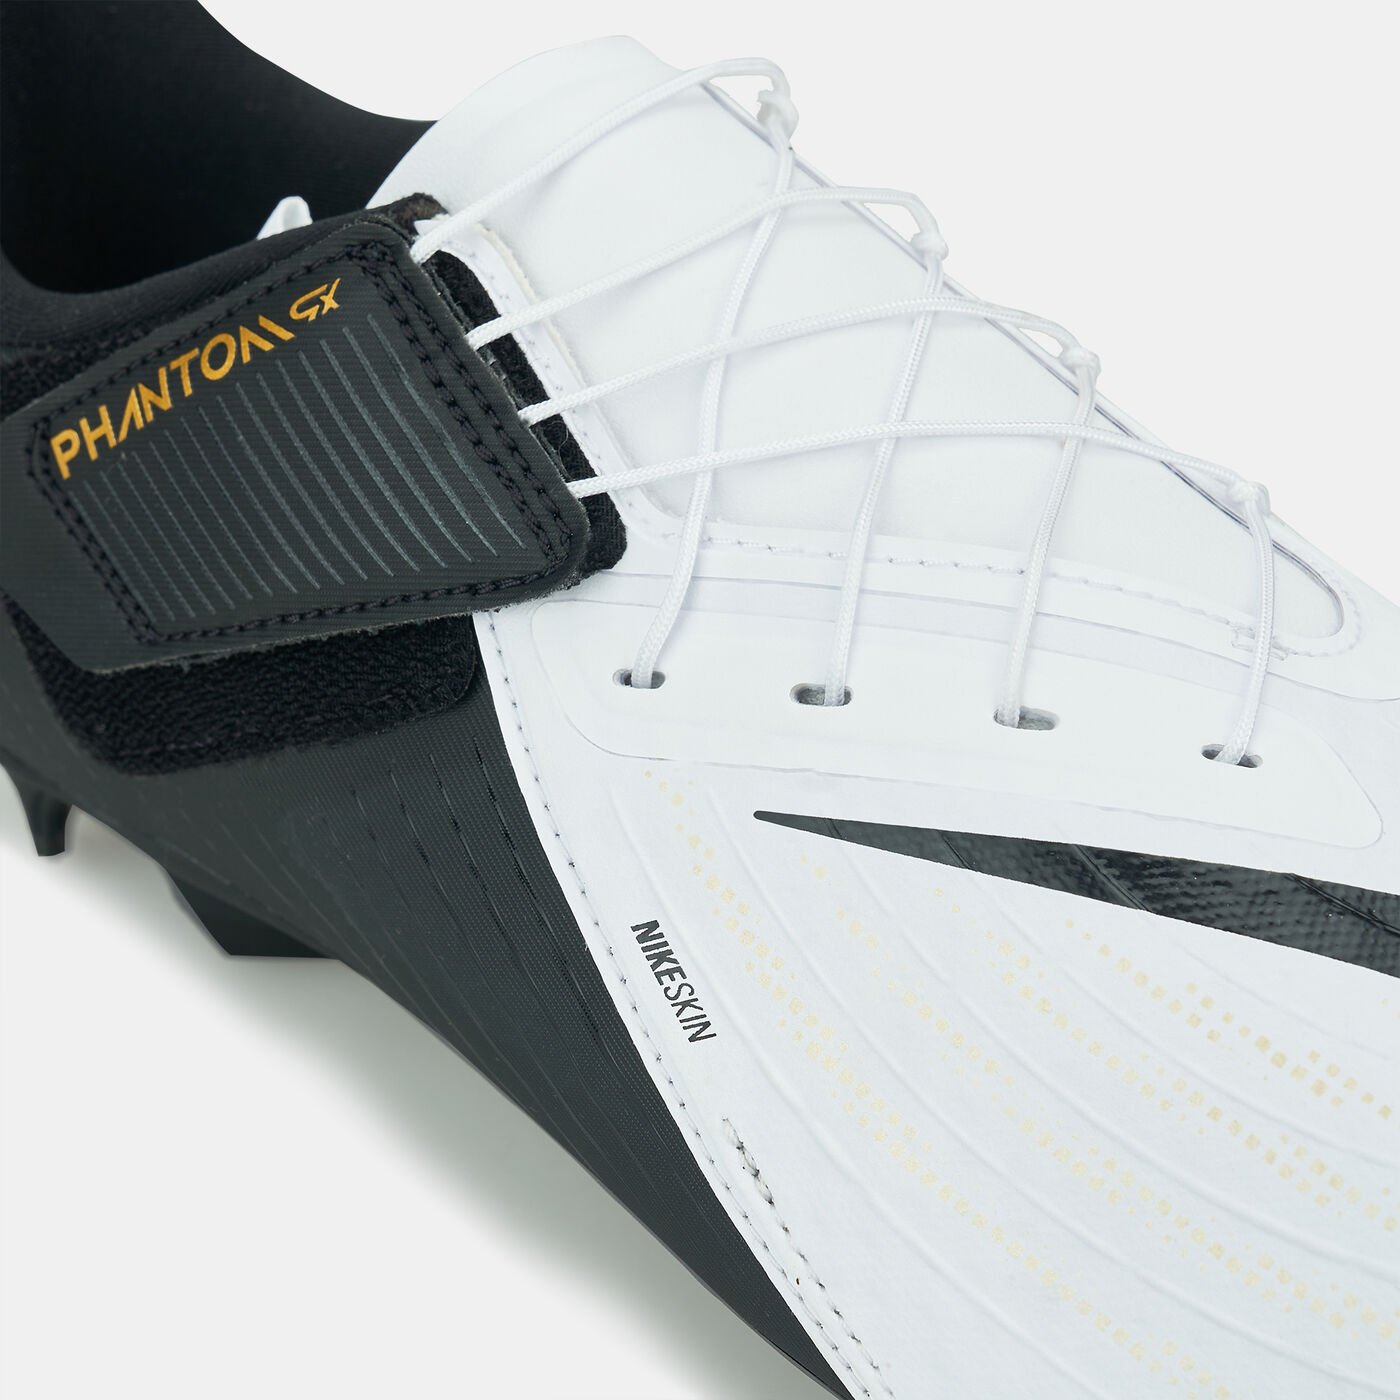 Men's Phantom GX 2 Academy Multi-Ground Football Shoes